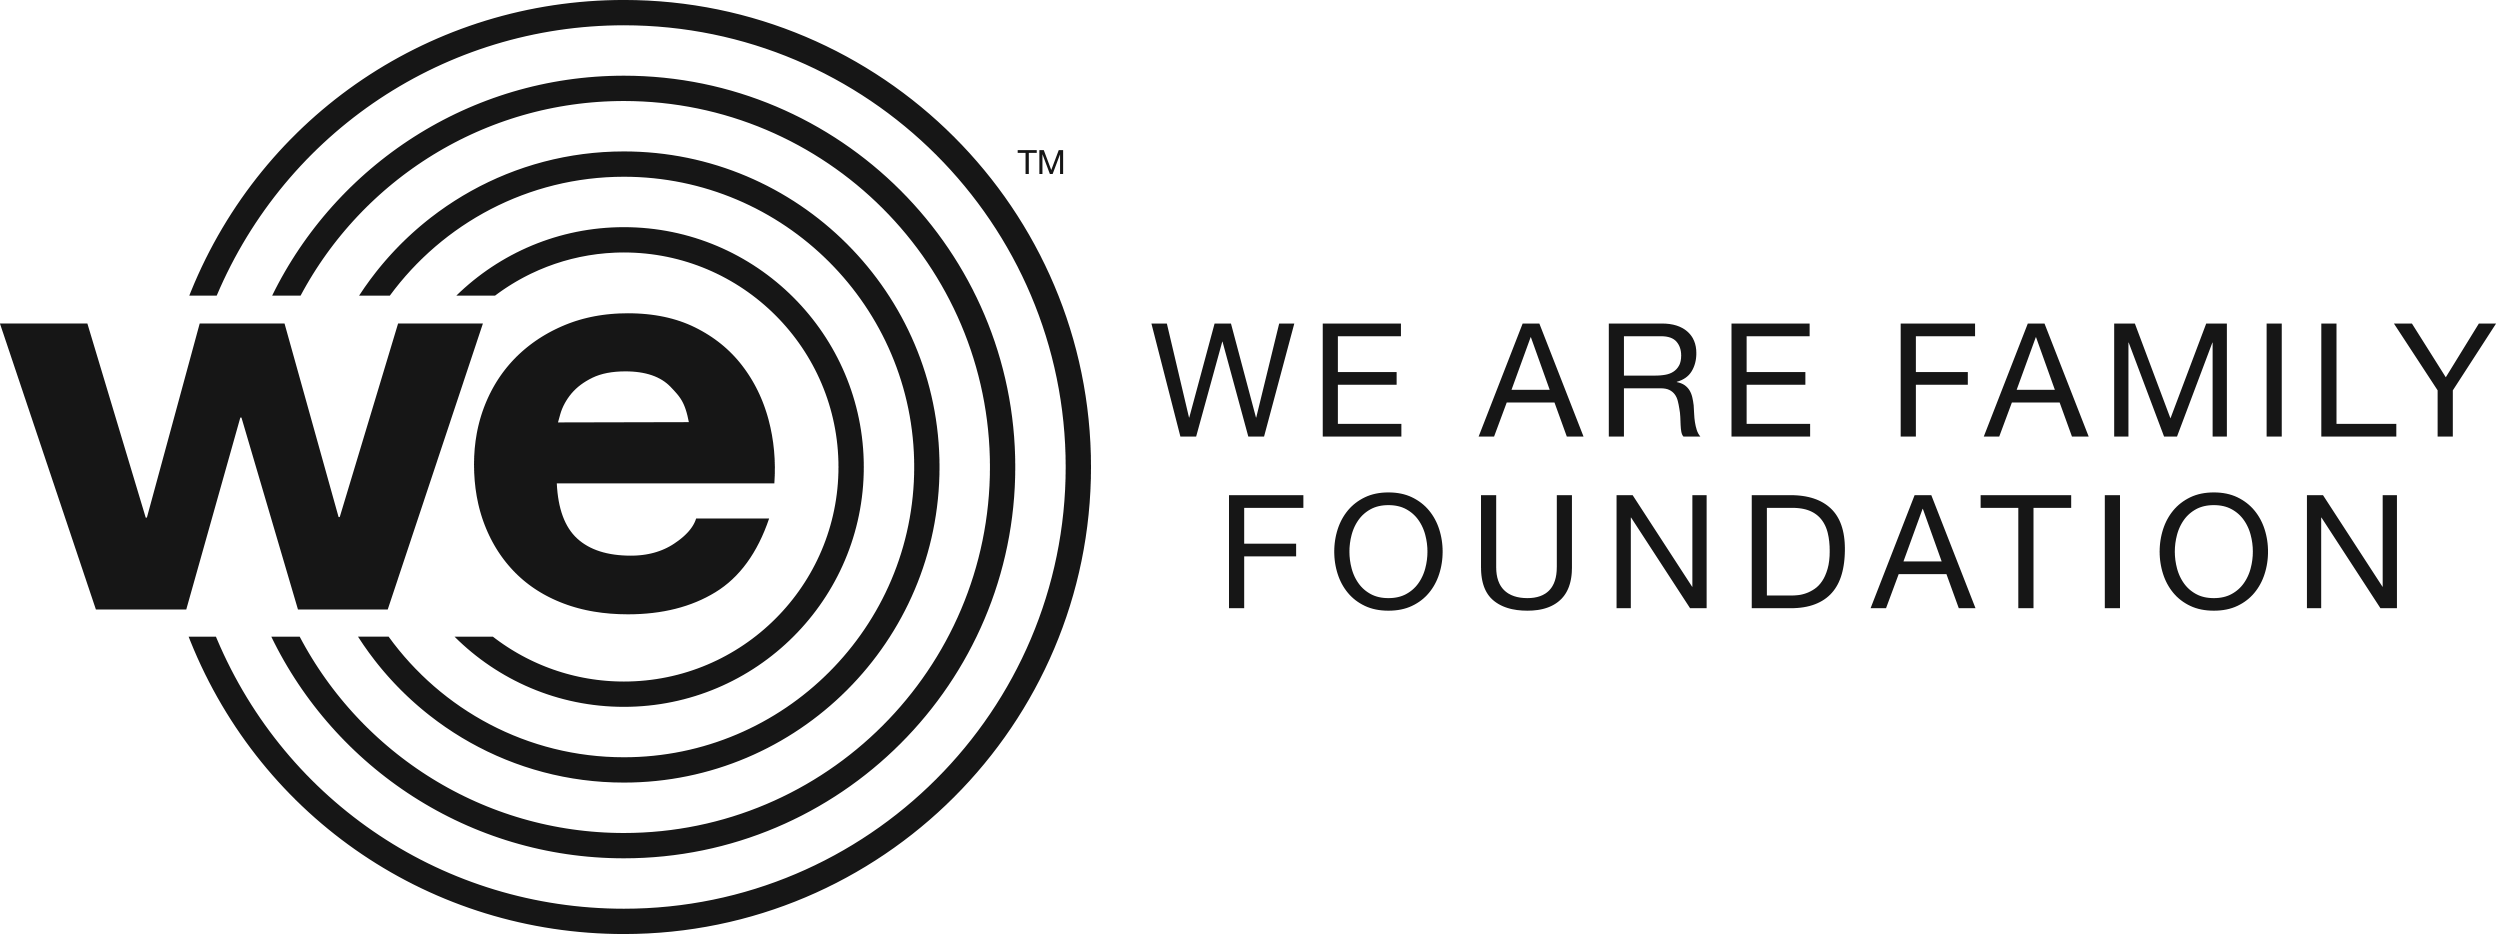 We Are Family Foundation Application Portal logo